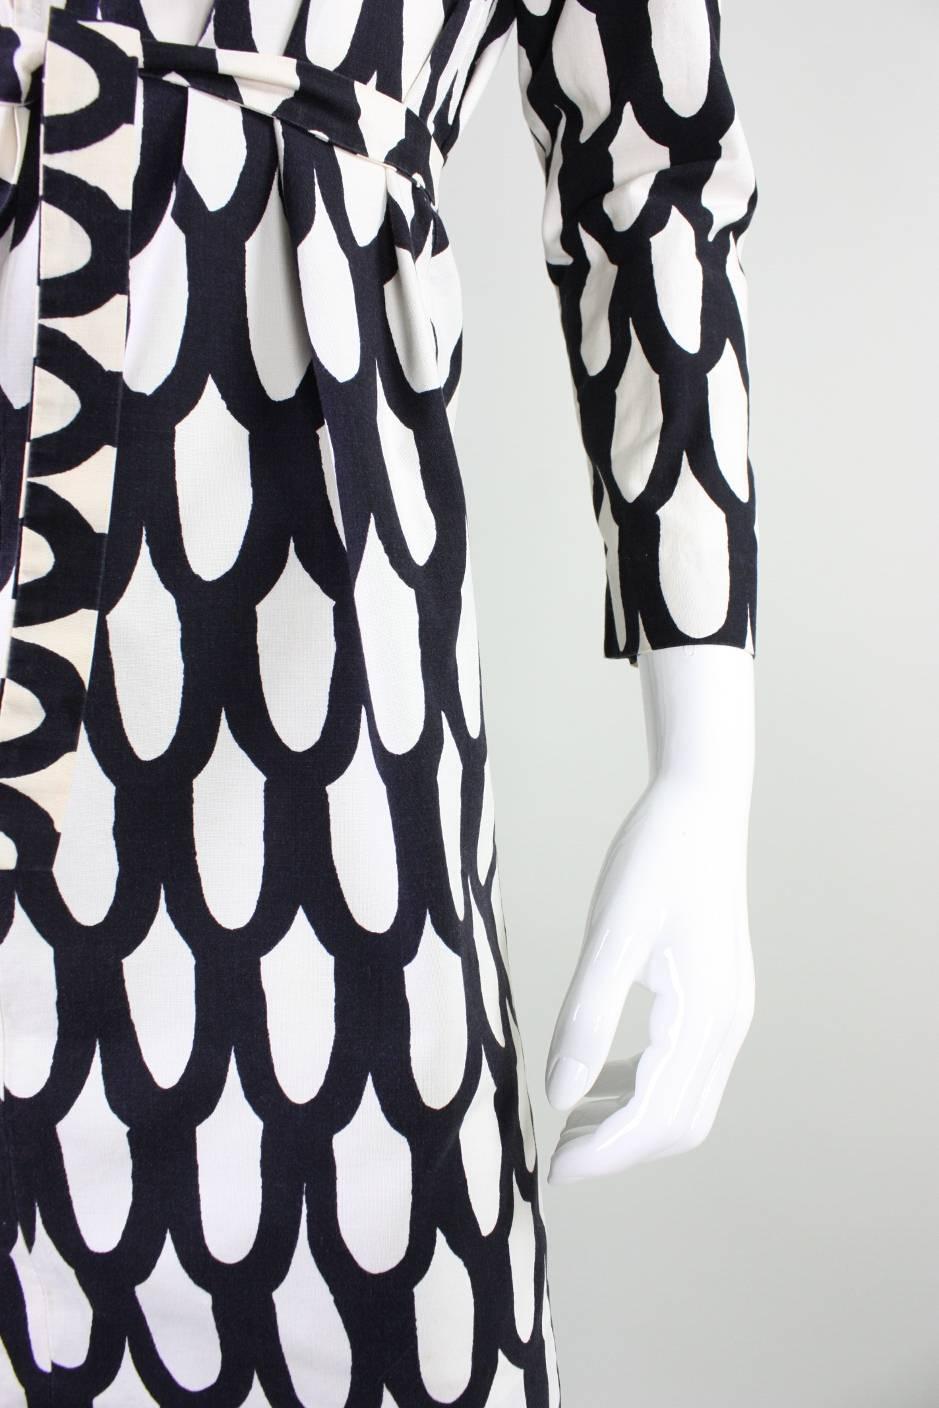 1965 Marimekko Black & White Printed Dress For Sale 3